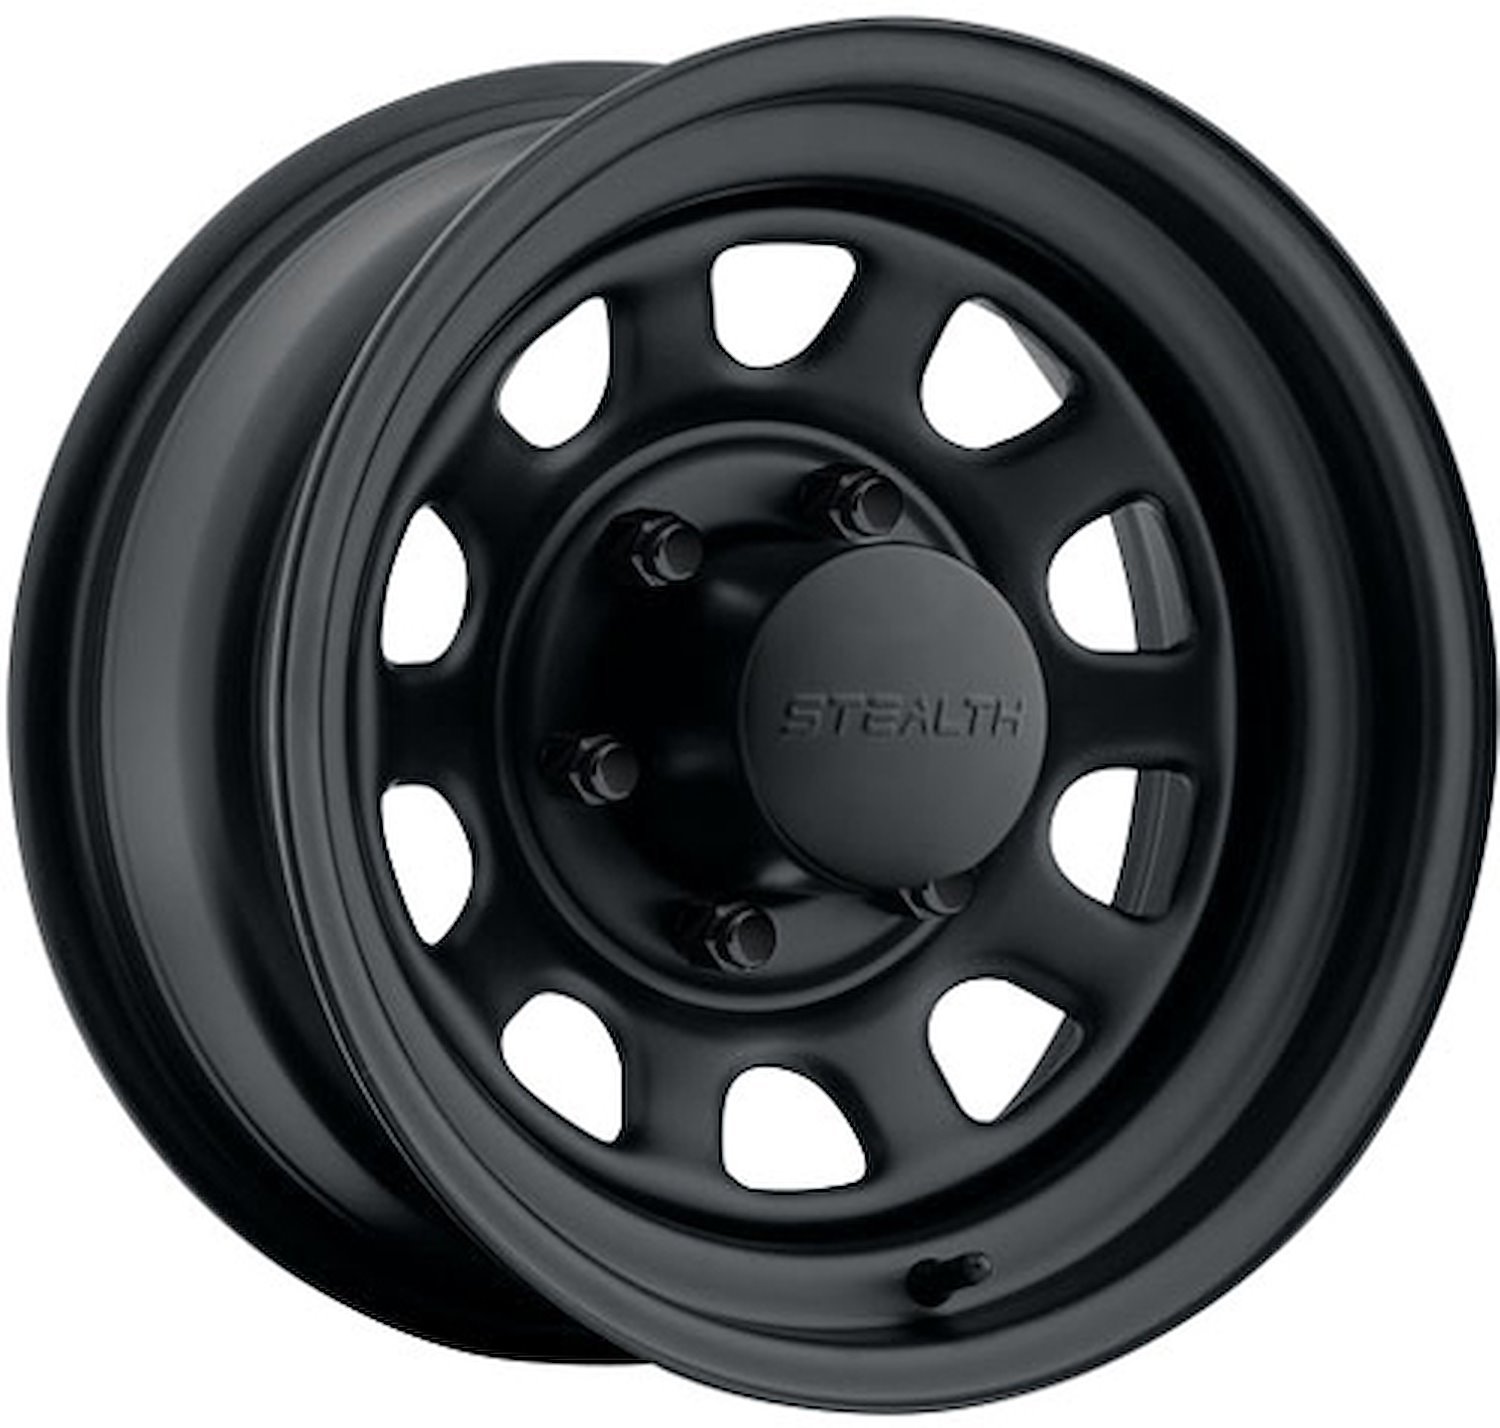 Stealth Black Daytona Wheel (Series 804) Size: 16" x 10"